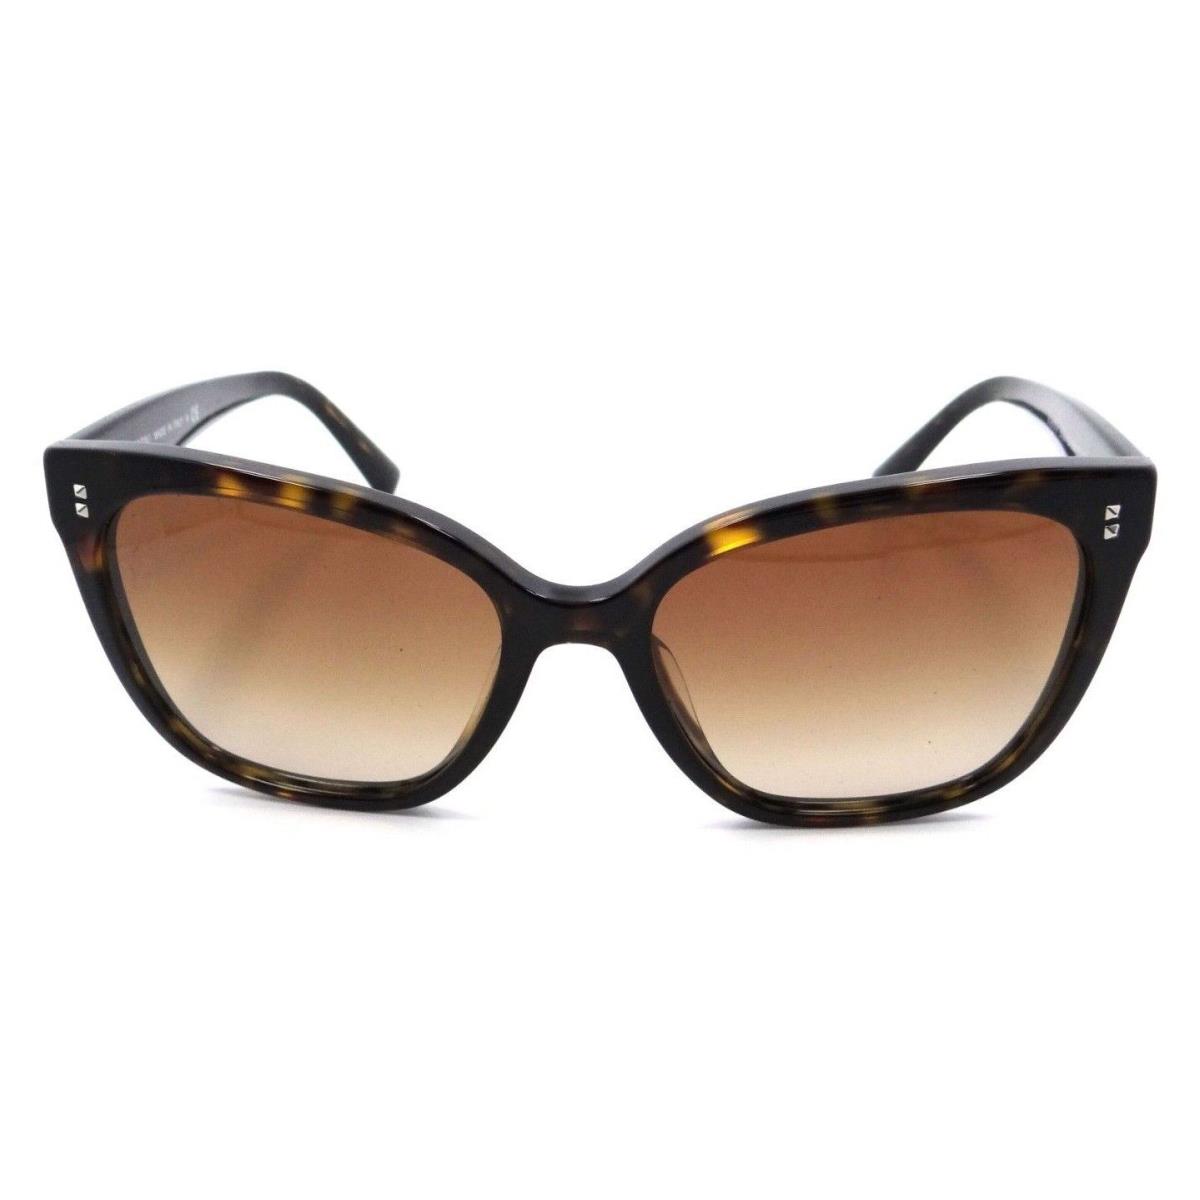 Valentino Sunglasses VA 4070A 5002/13 55-17-140 Havana / Brown Gradient Italy